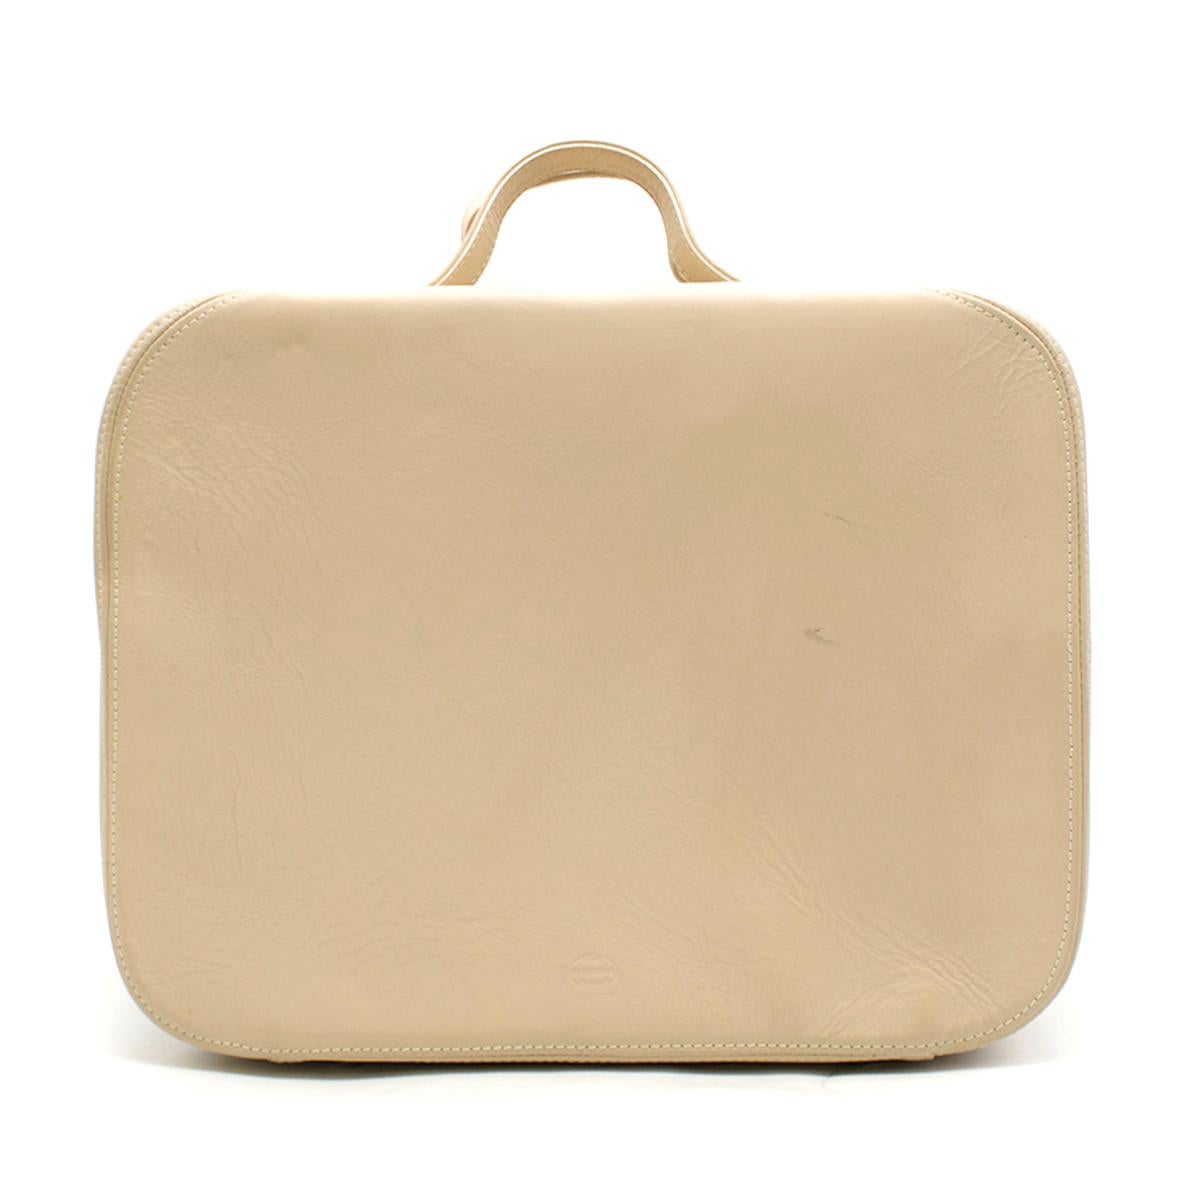 beige leather luggage bag